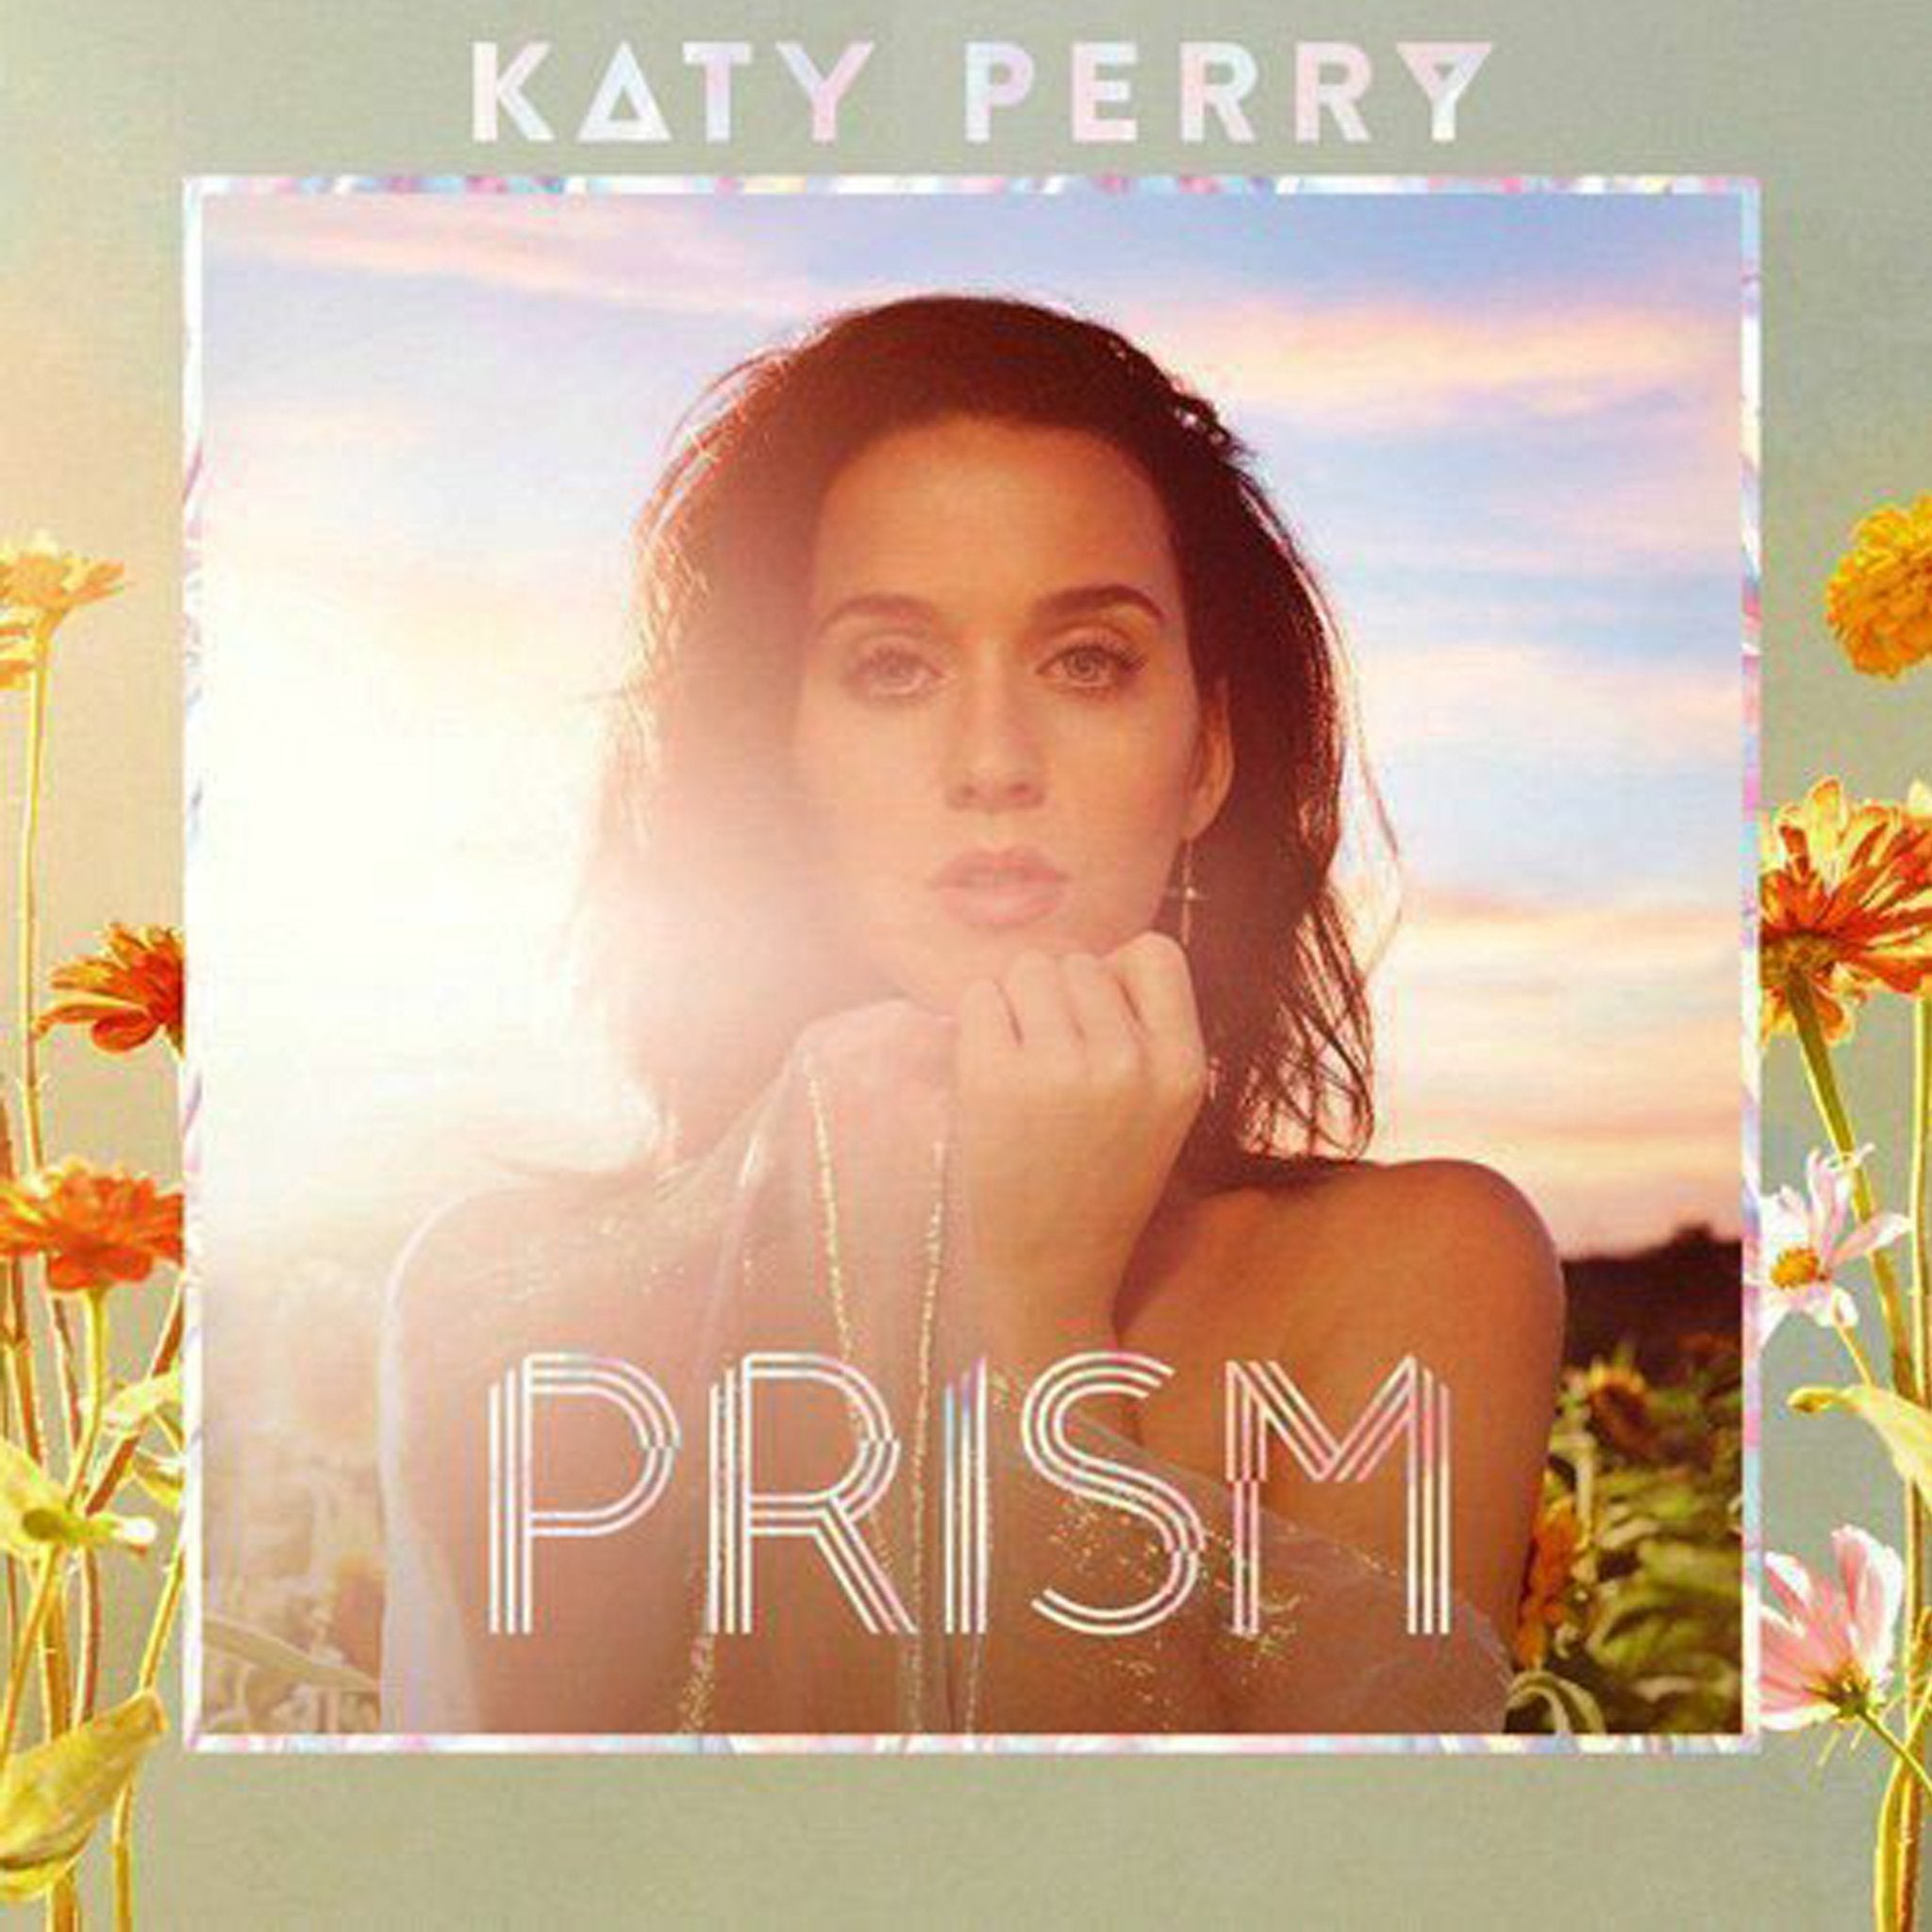 Katy Parry - Prism Australia